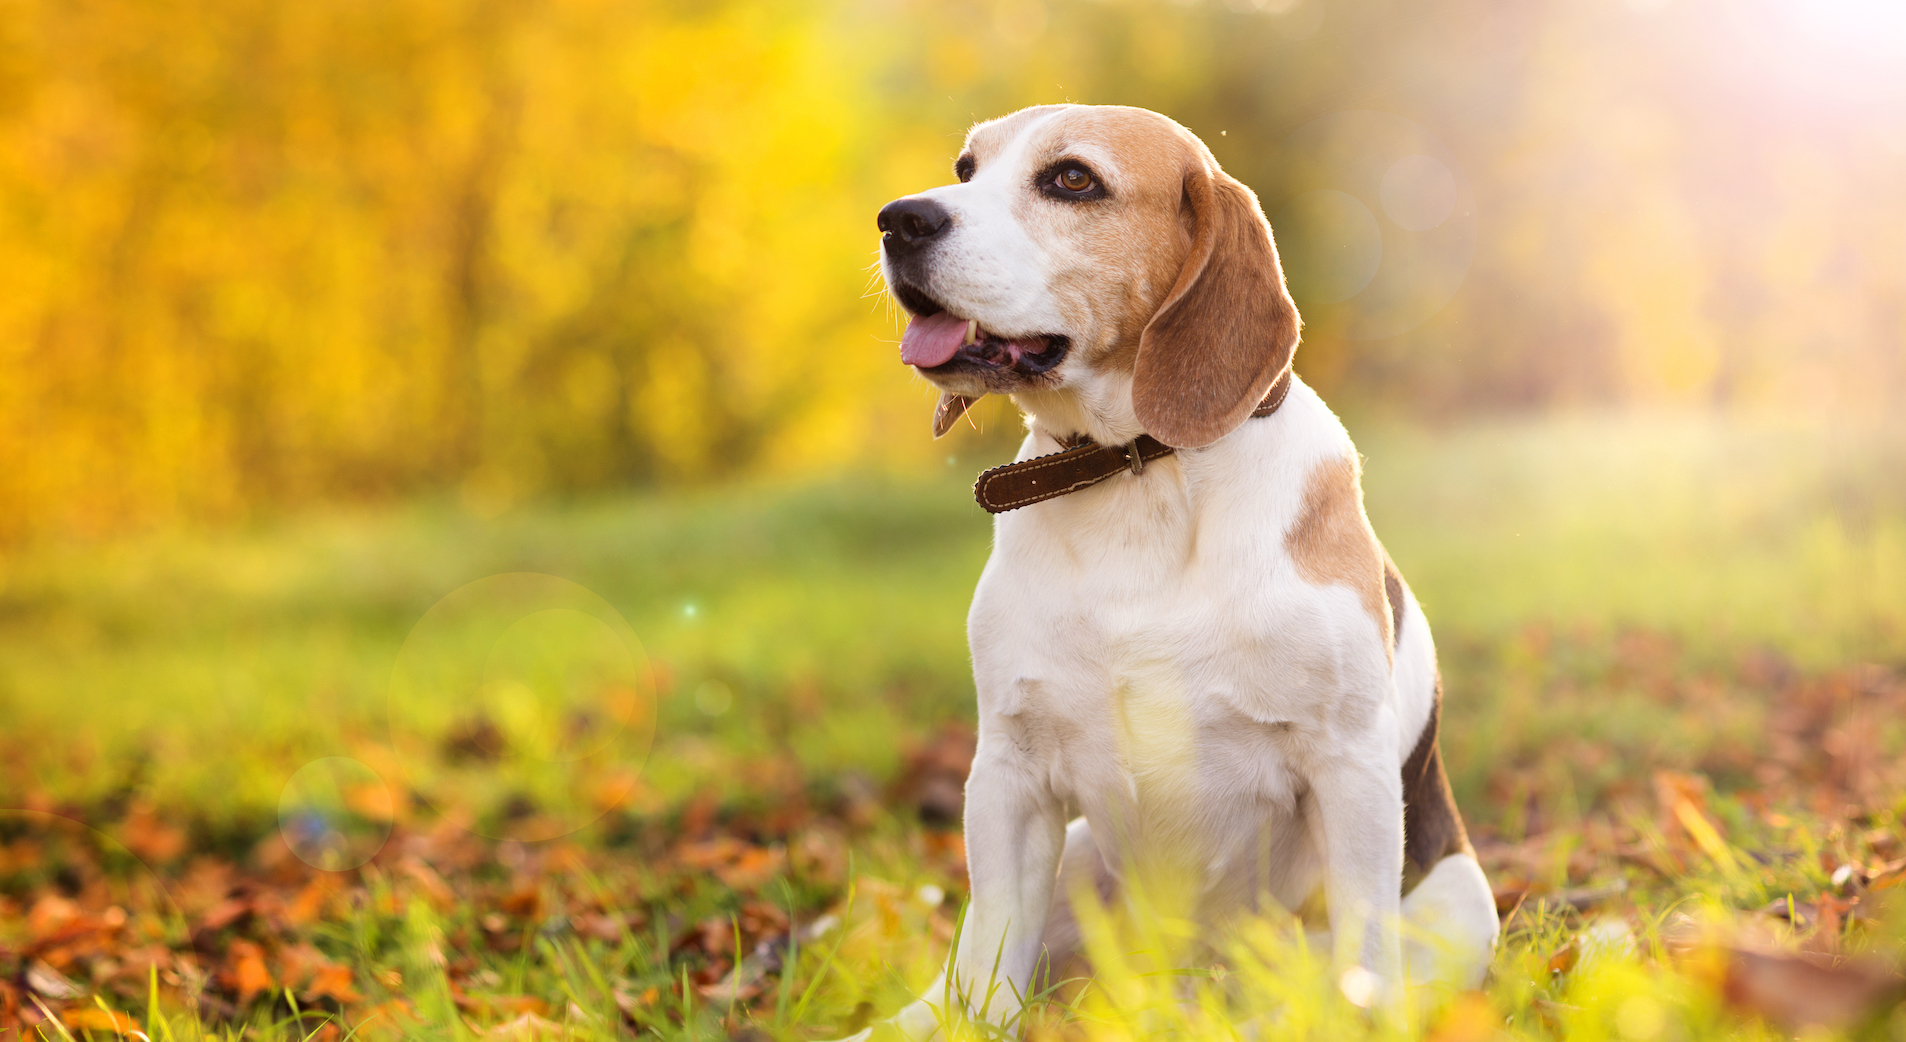 A beagle in autumn